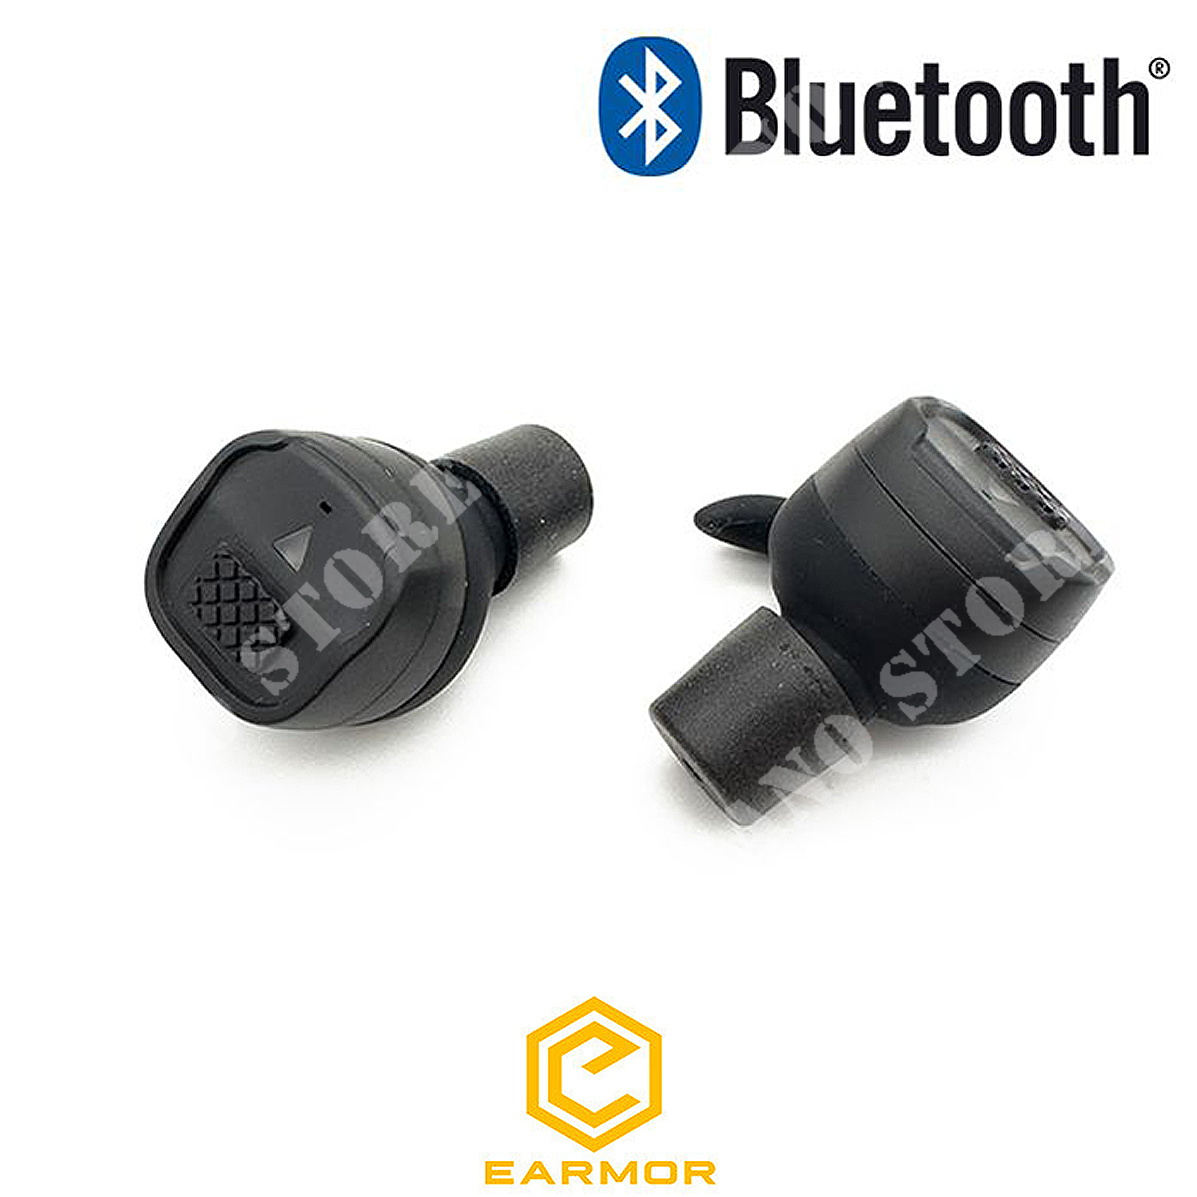 Airsoft Wo Sport Cible Connectée Bluetooth